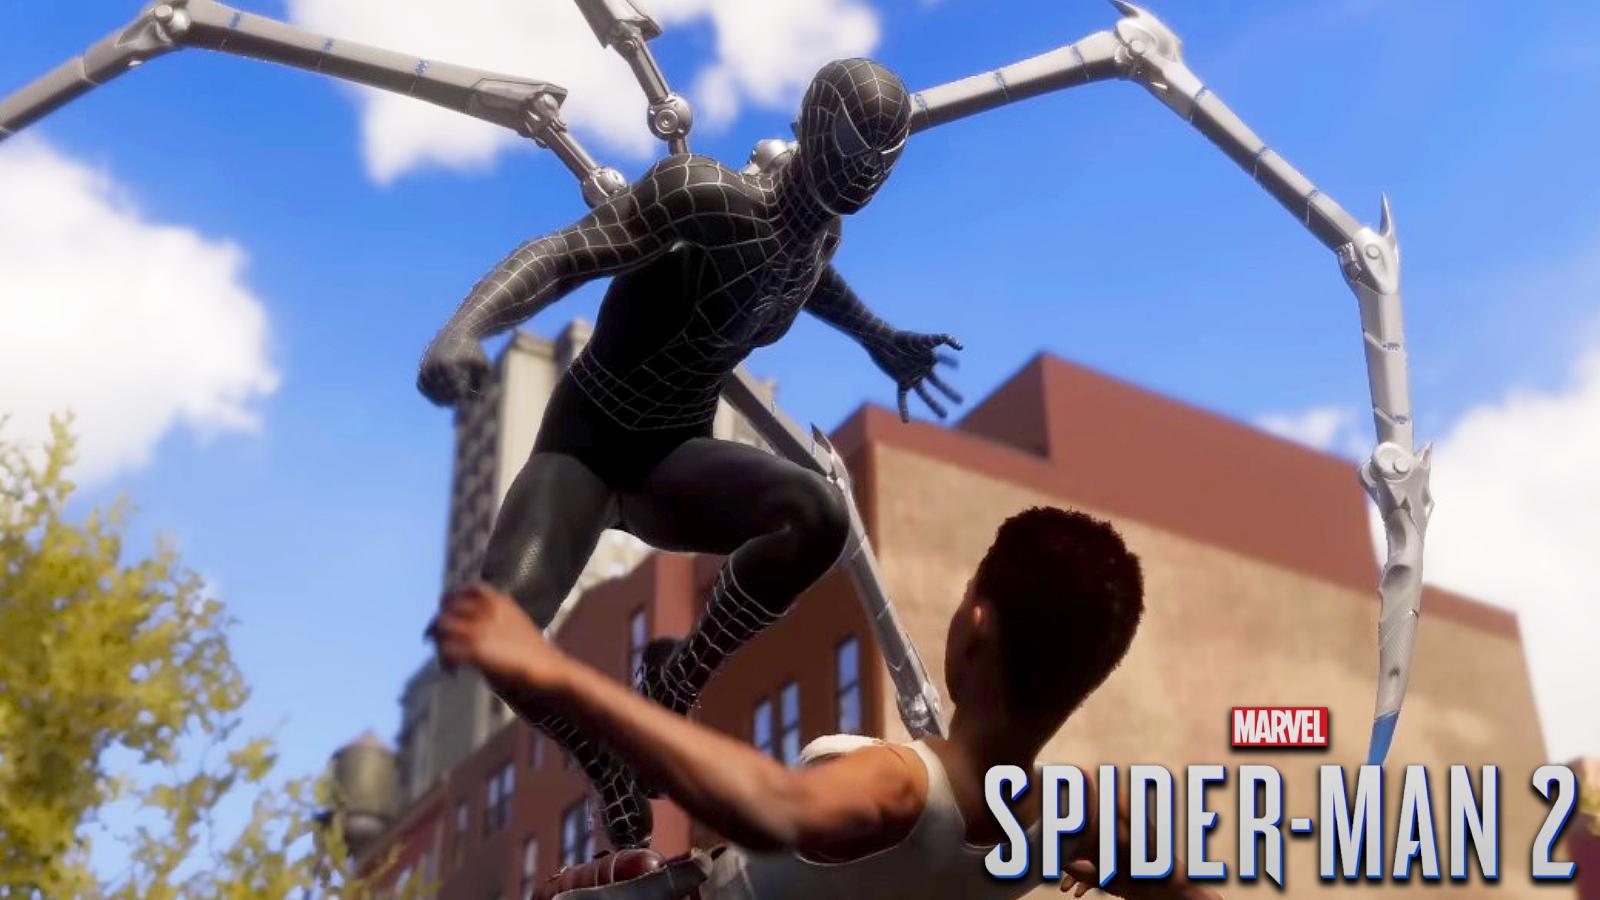 The Webbed Black Suit in Marvel's Spider-Man 2